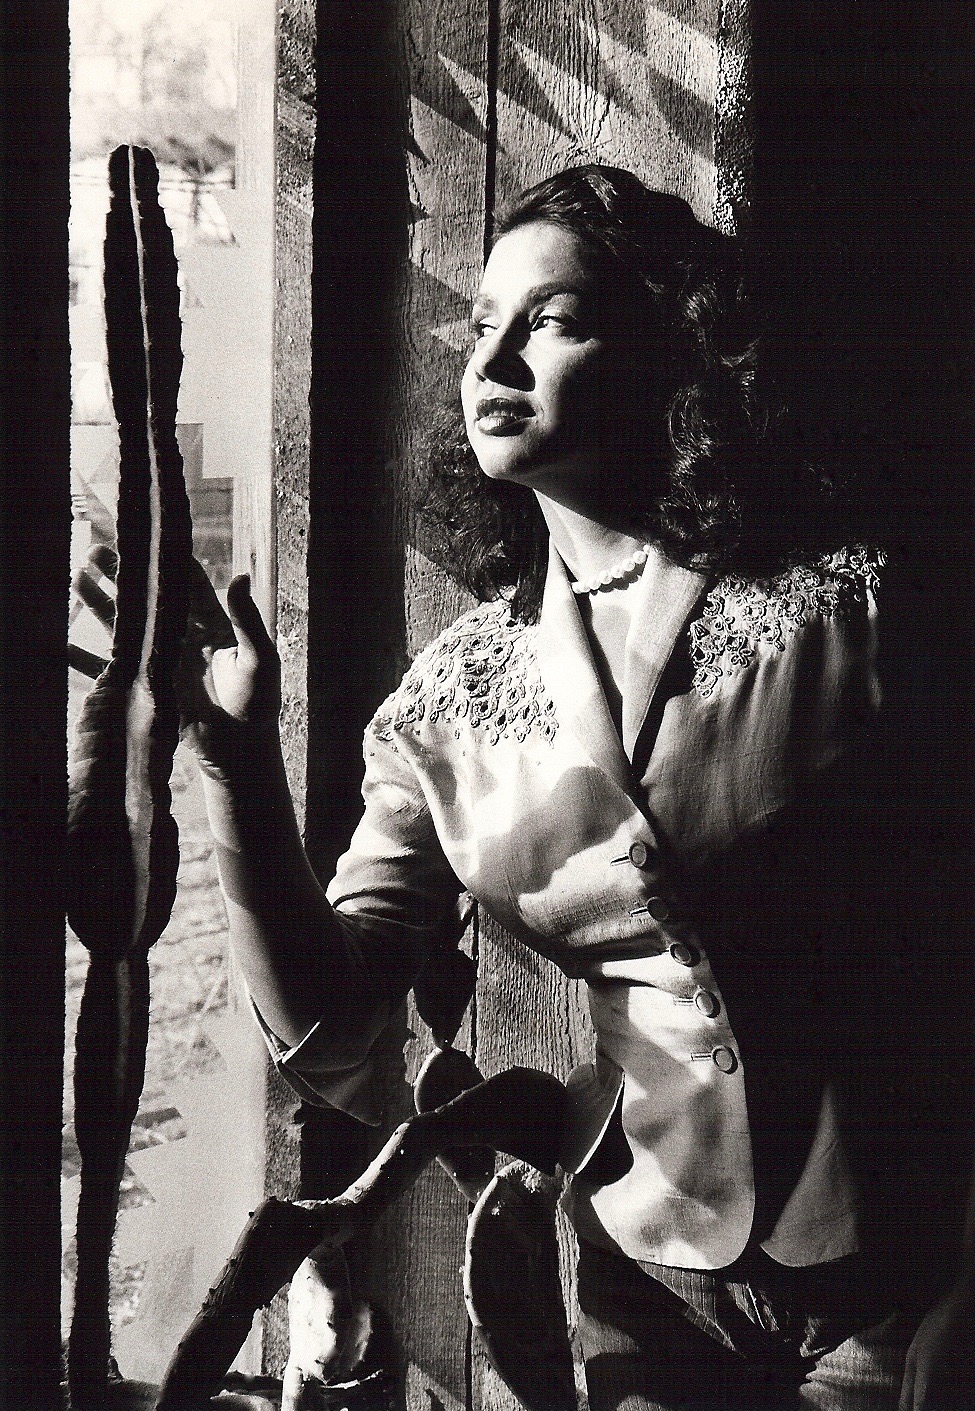 Julia King Photographs - fashion, advertising, portrait, fine art - New York City and Santa Fe, New Mexico, 1980s